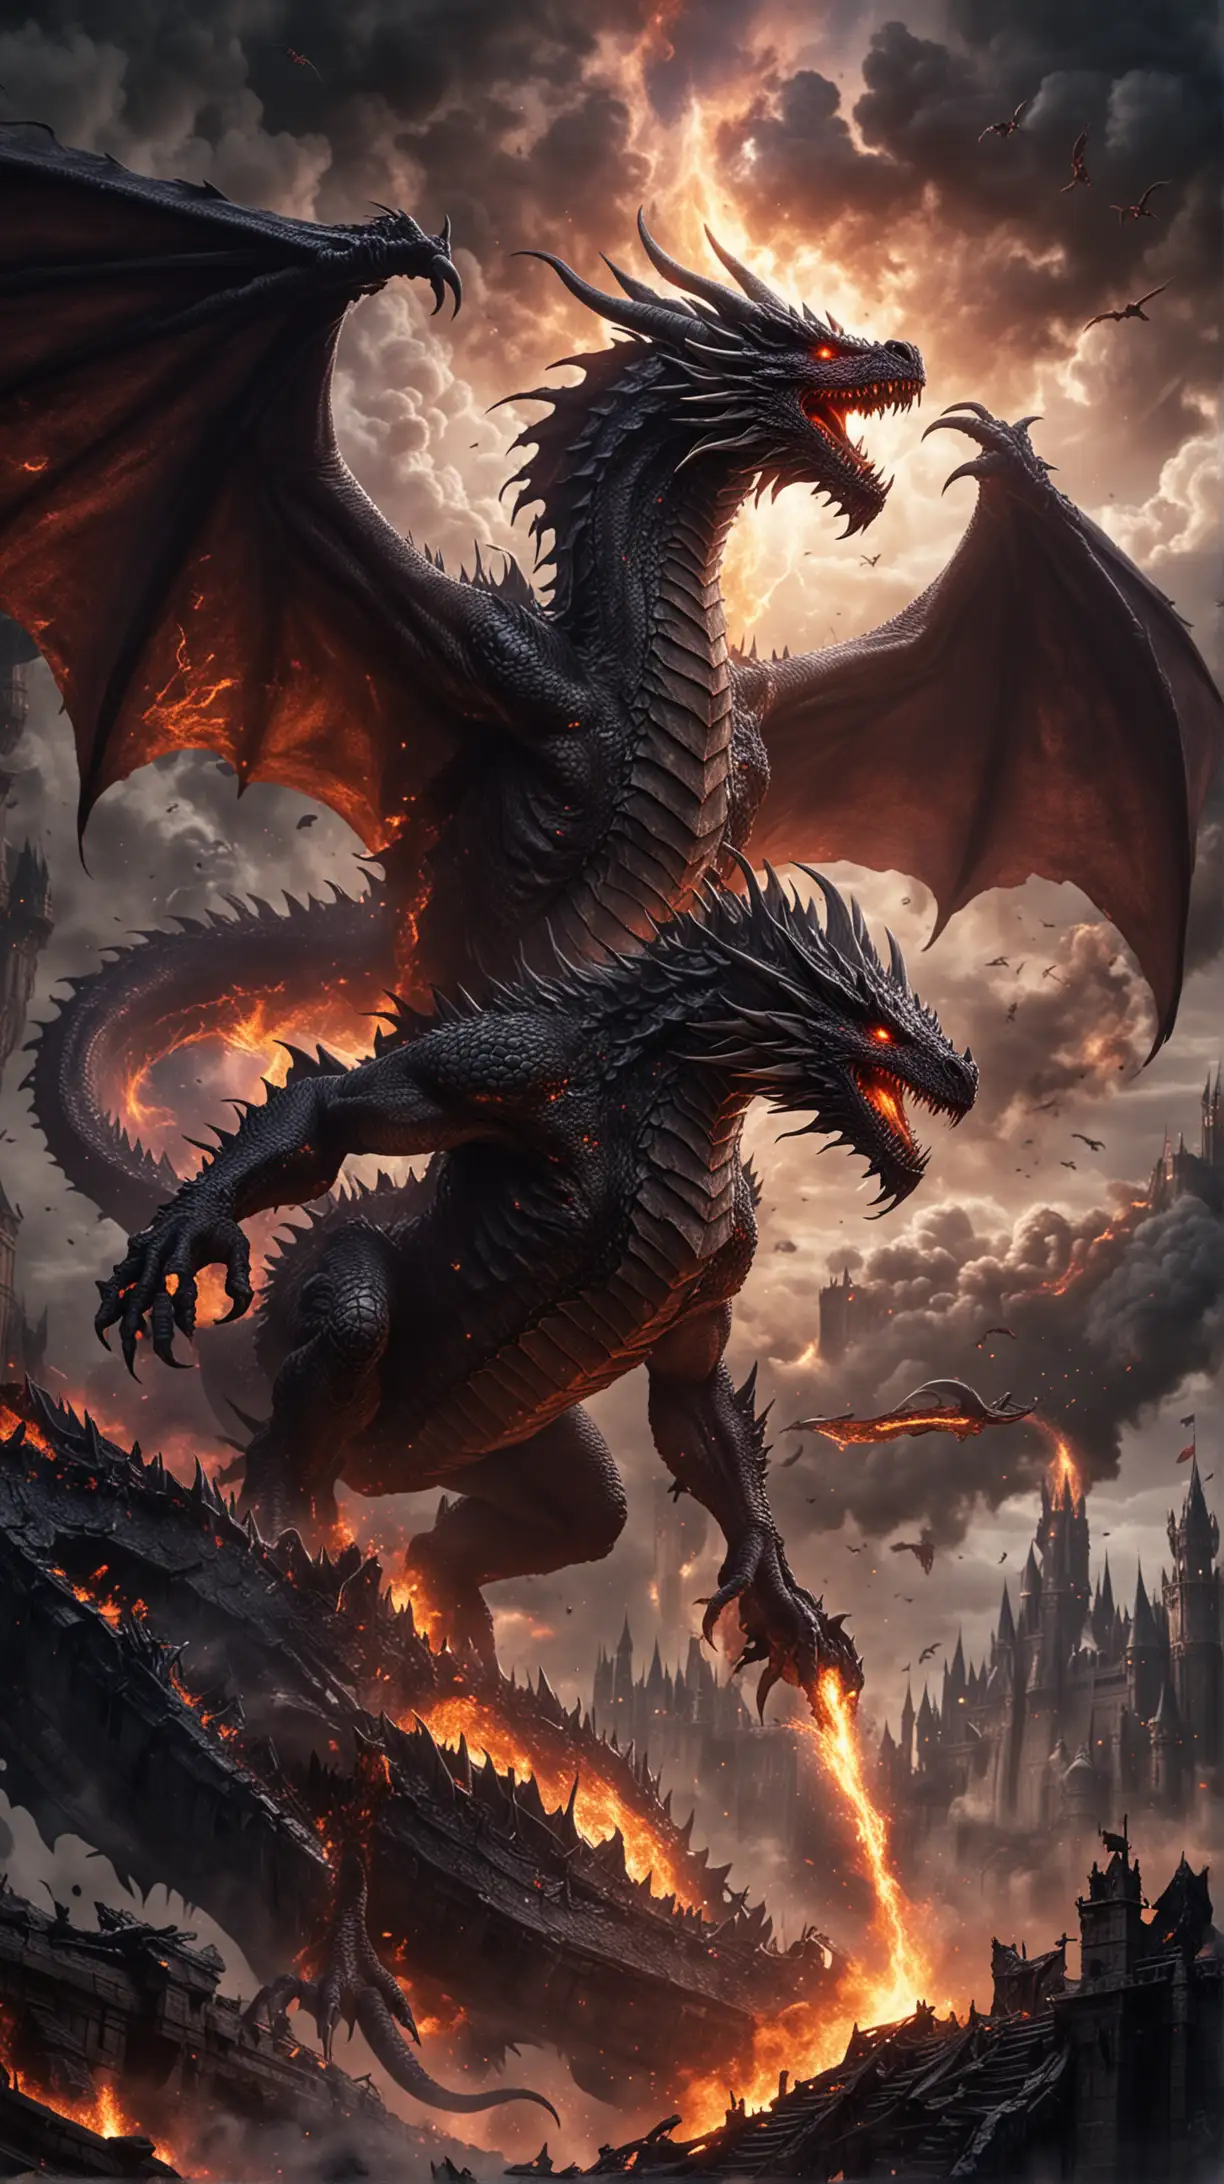 Malevolent Dragon Spreading Chaos in a Cursed Kingdom